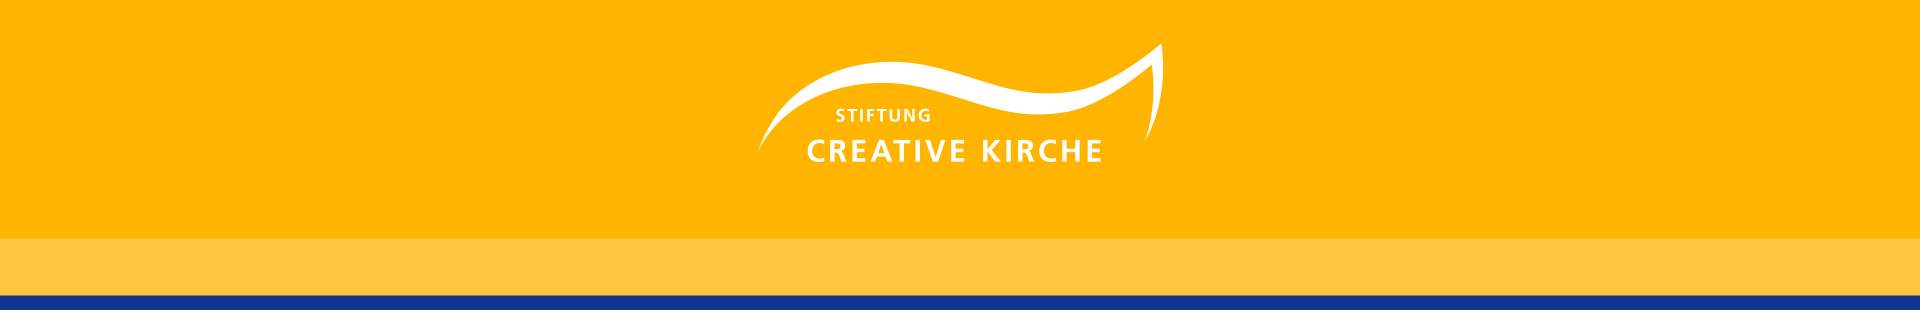 VRK Creative Kirche – Das Logo Stiftung Creative Kirche.